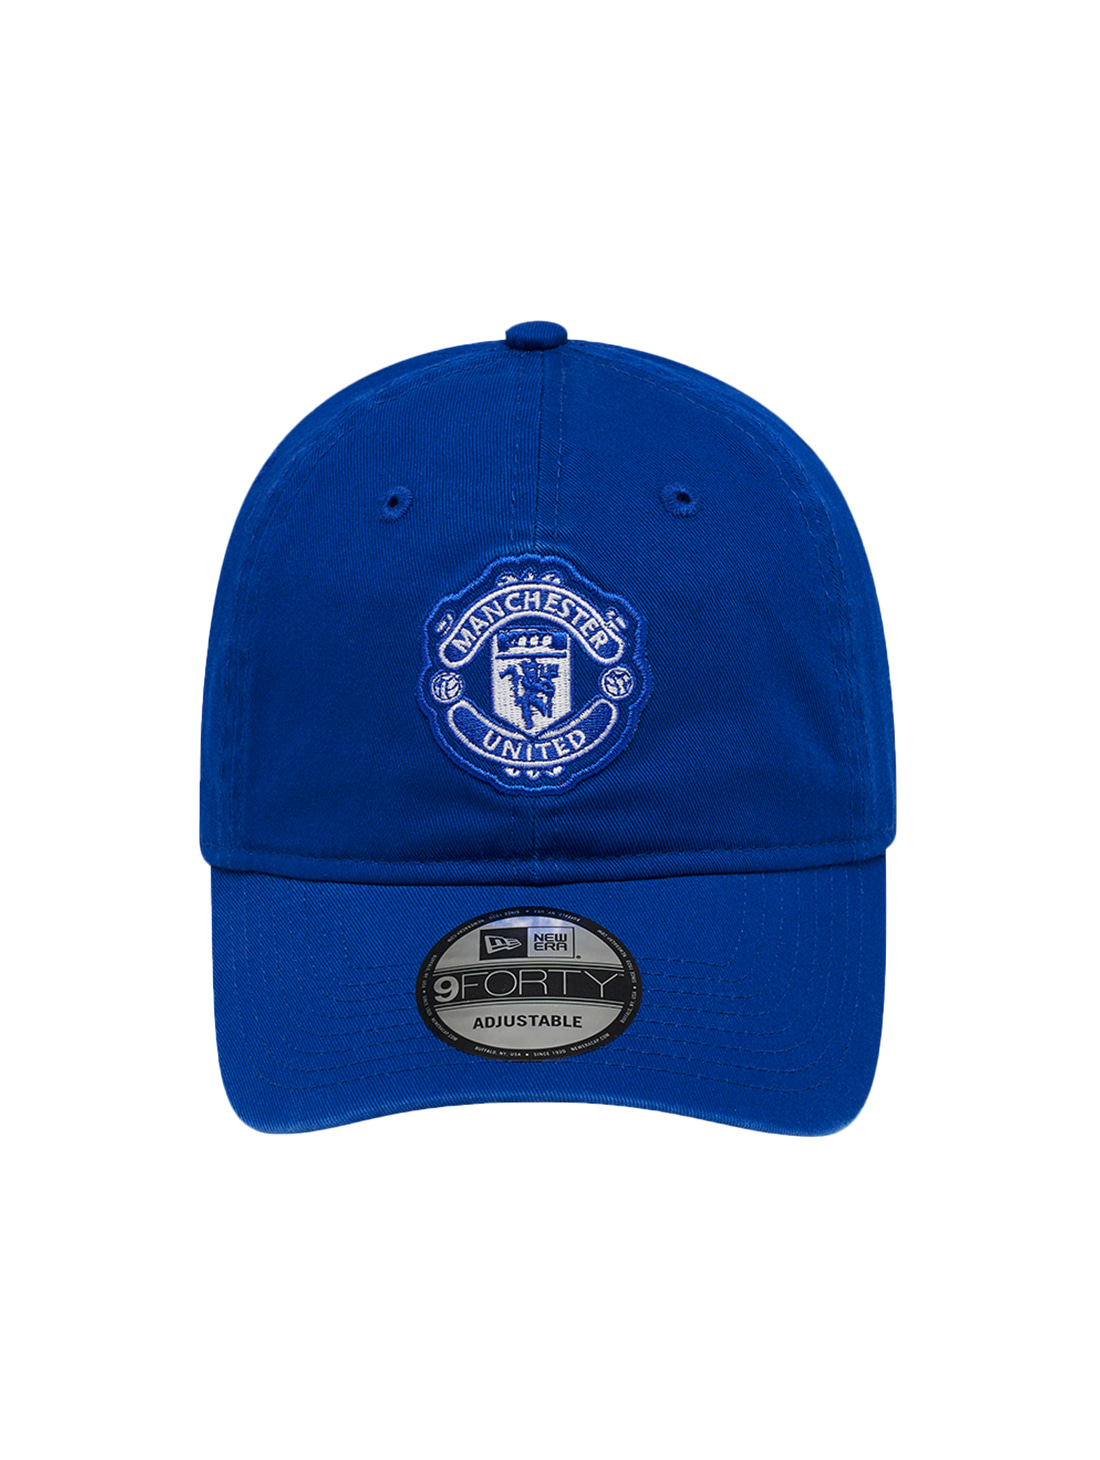 MAN U 940UNST BALL CAP - BLUE